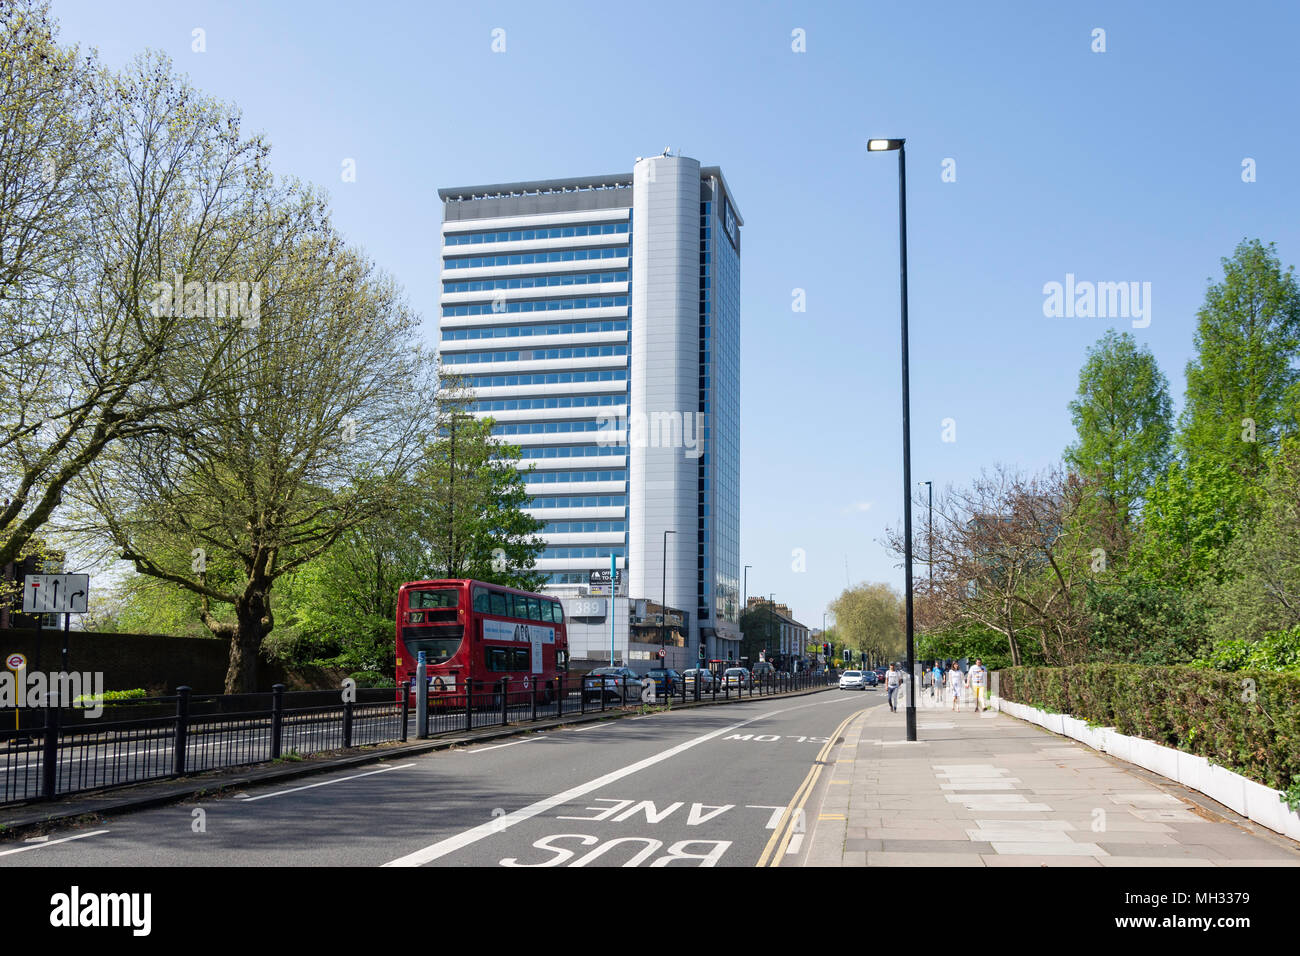 Chiswick Tower building, Chiswick High Street, Chiswick, London Borough of Hounslow, Greater London, England, United Kingdom Stock Photo